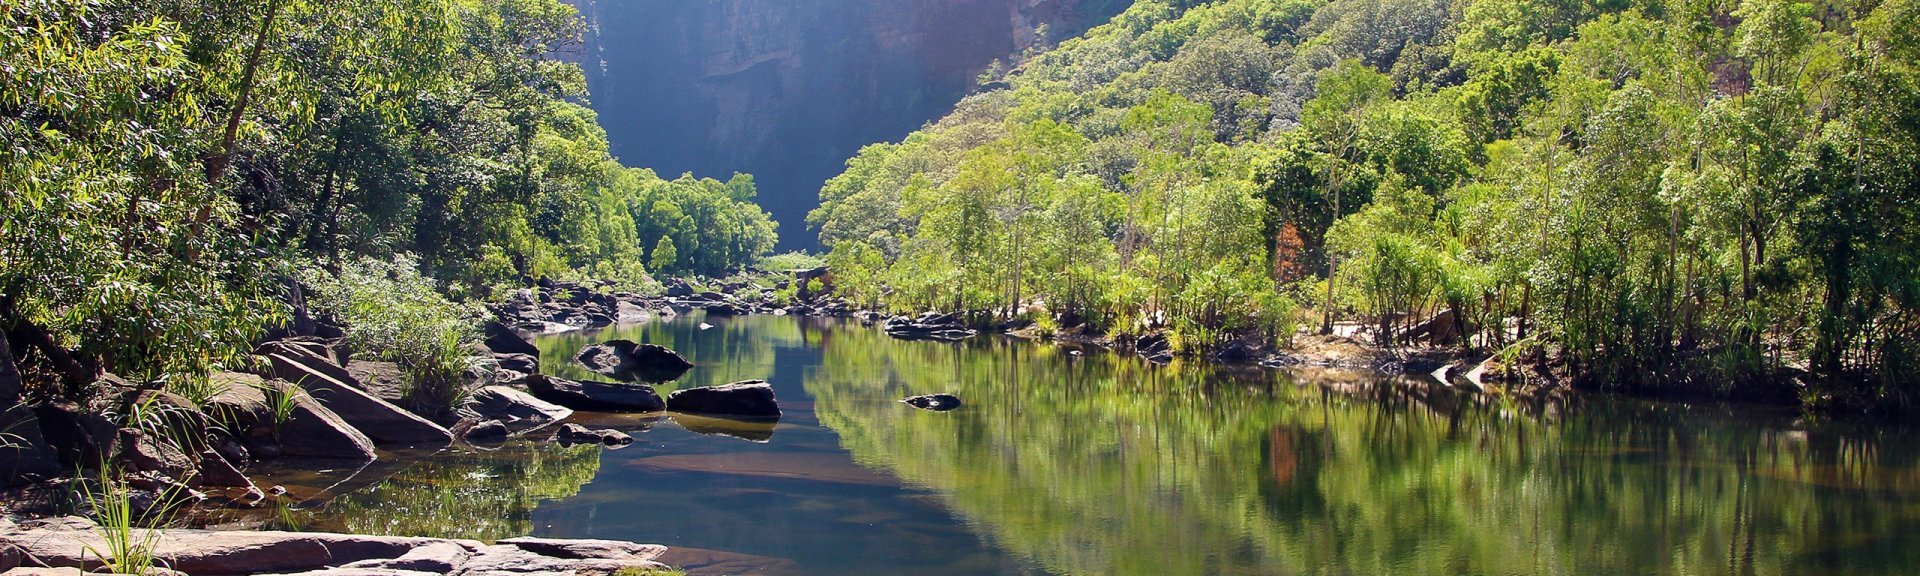 Kakadu river landscape. Photo: G Adventures and Leah Griffin